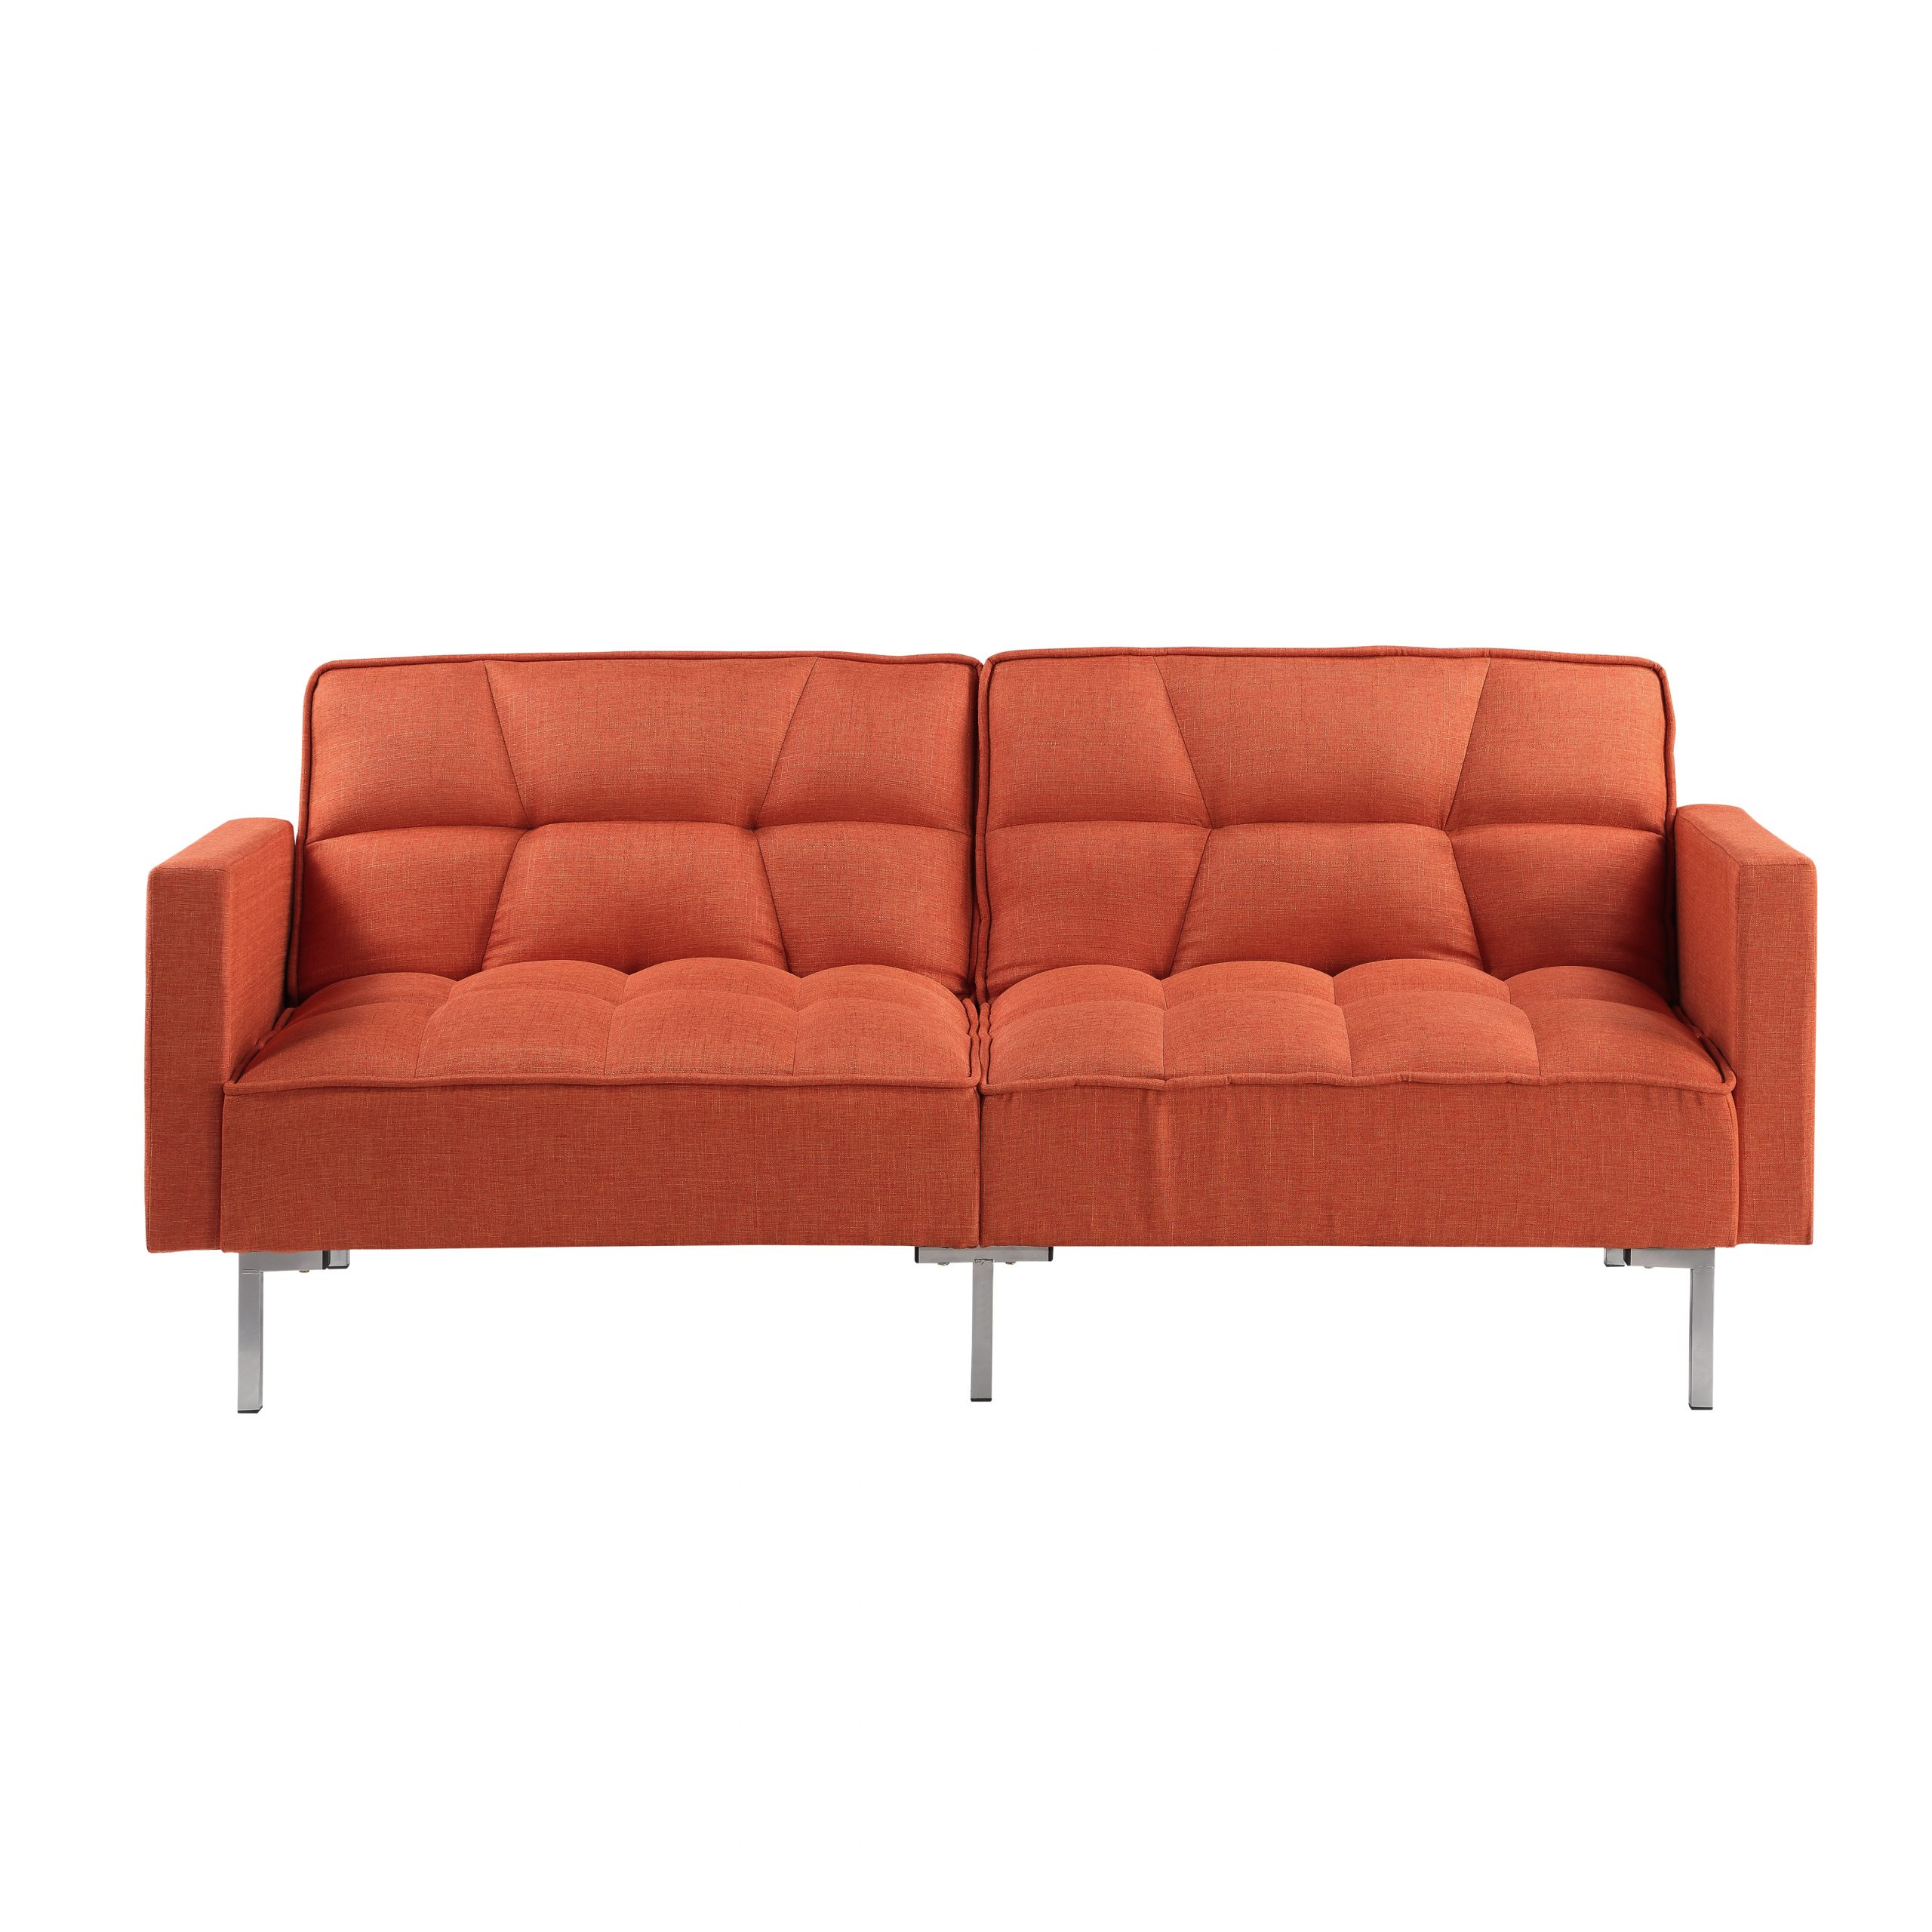 Modern Convertible Folding Sofa Bed - SG000375AAA